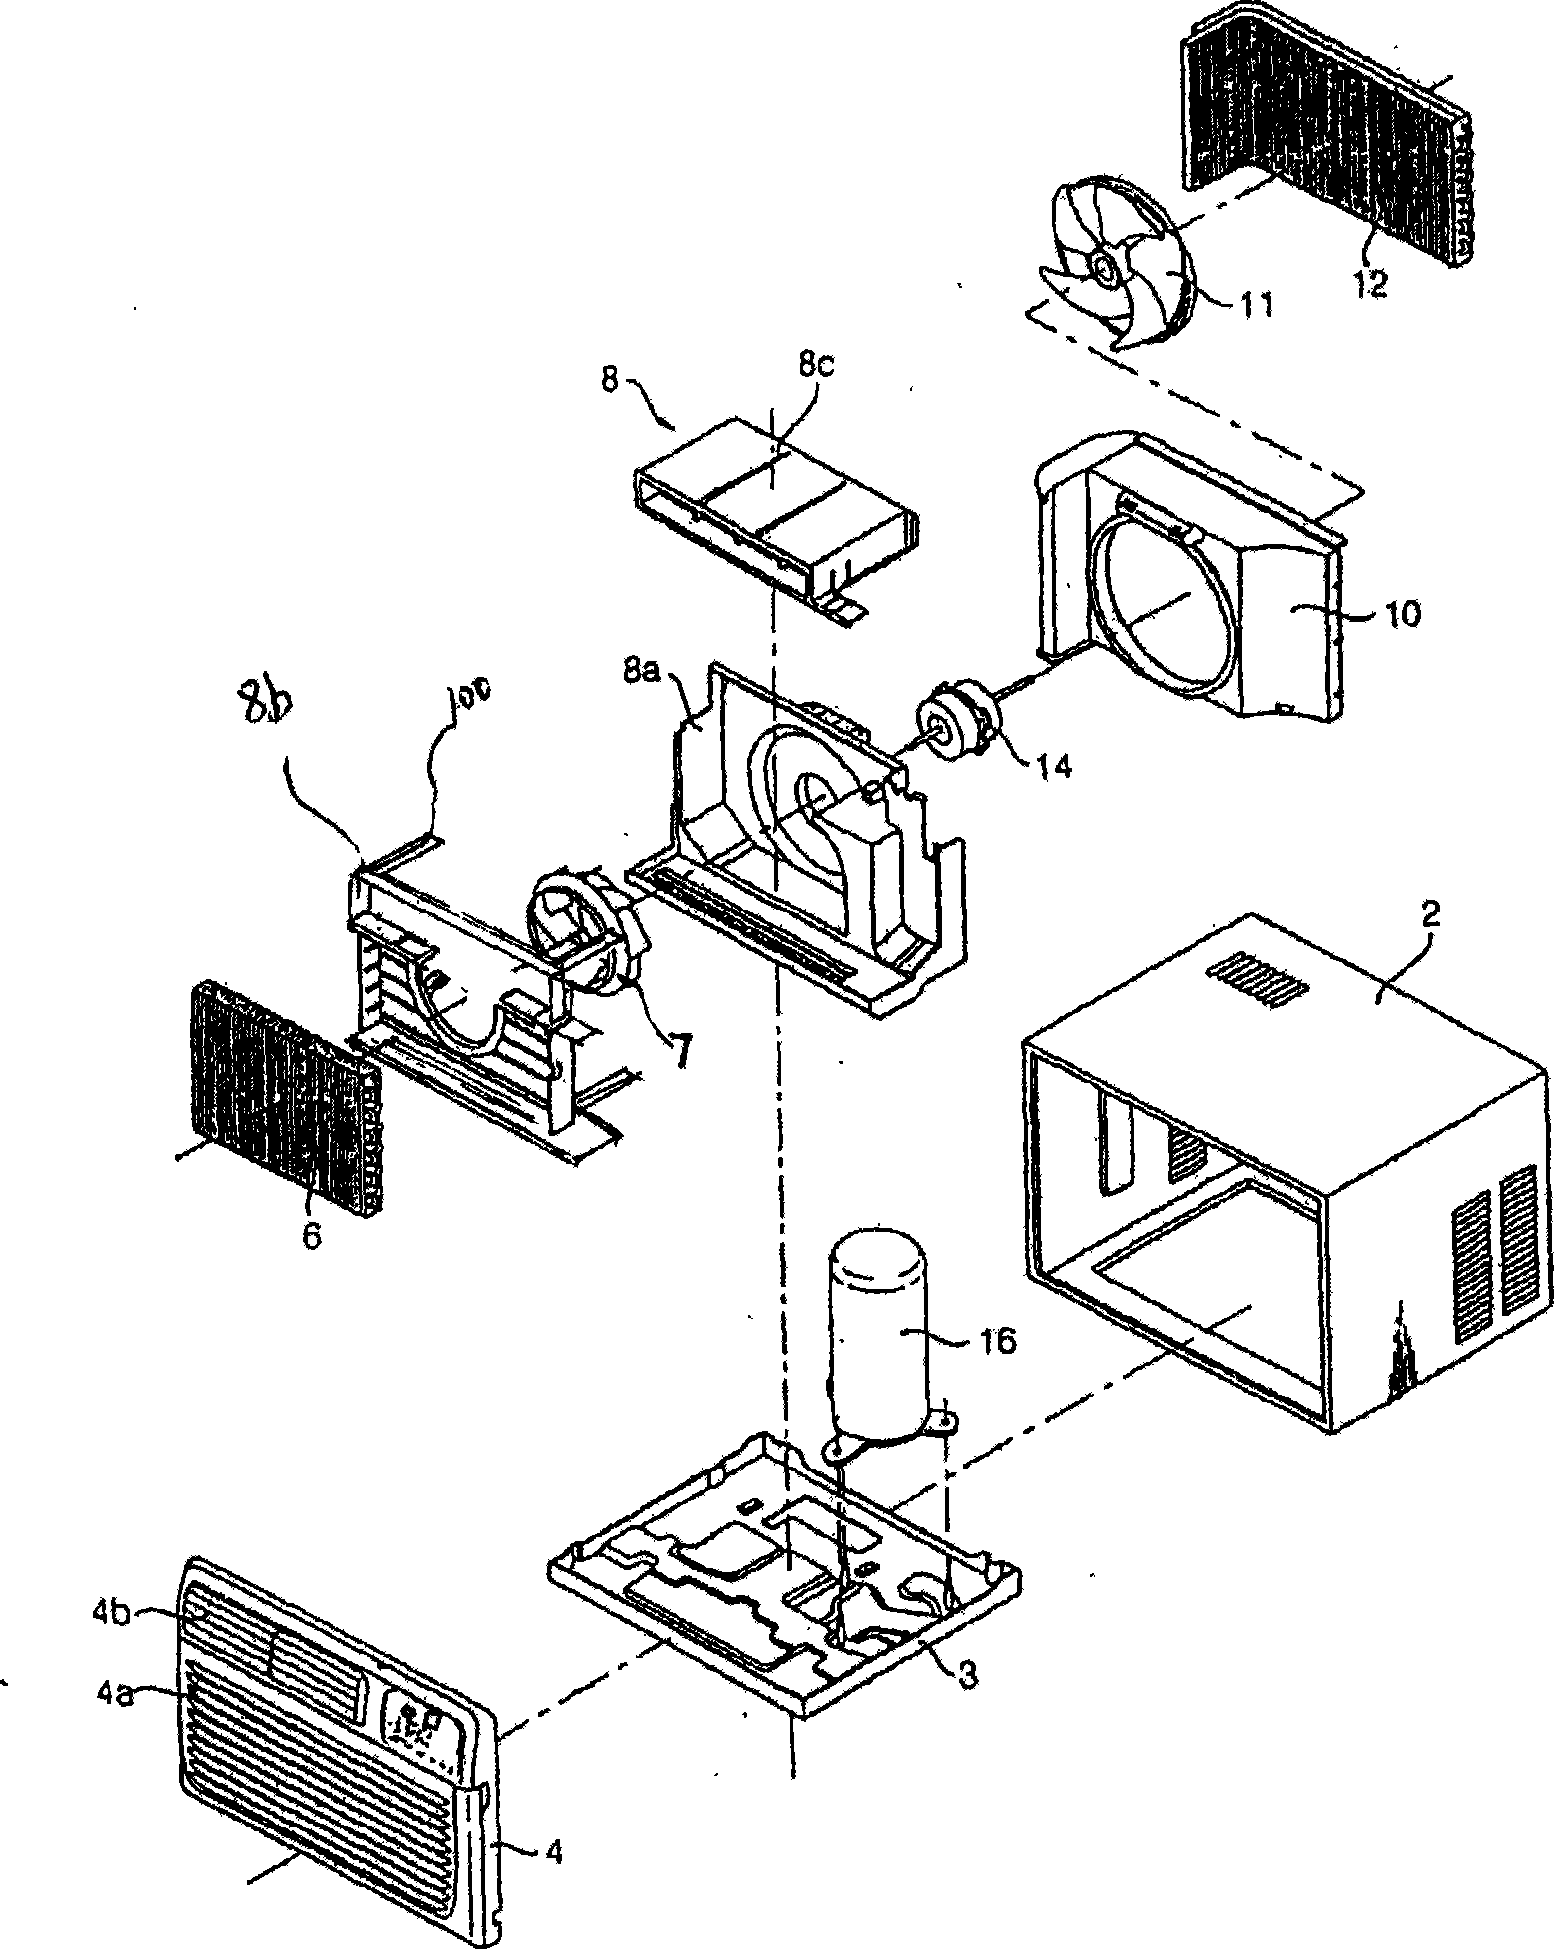 Air guiding apparatus of window air conditioner